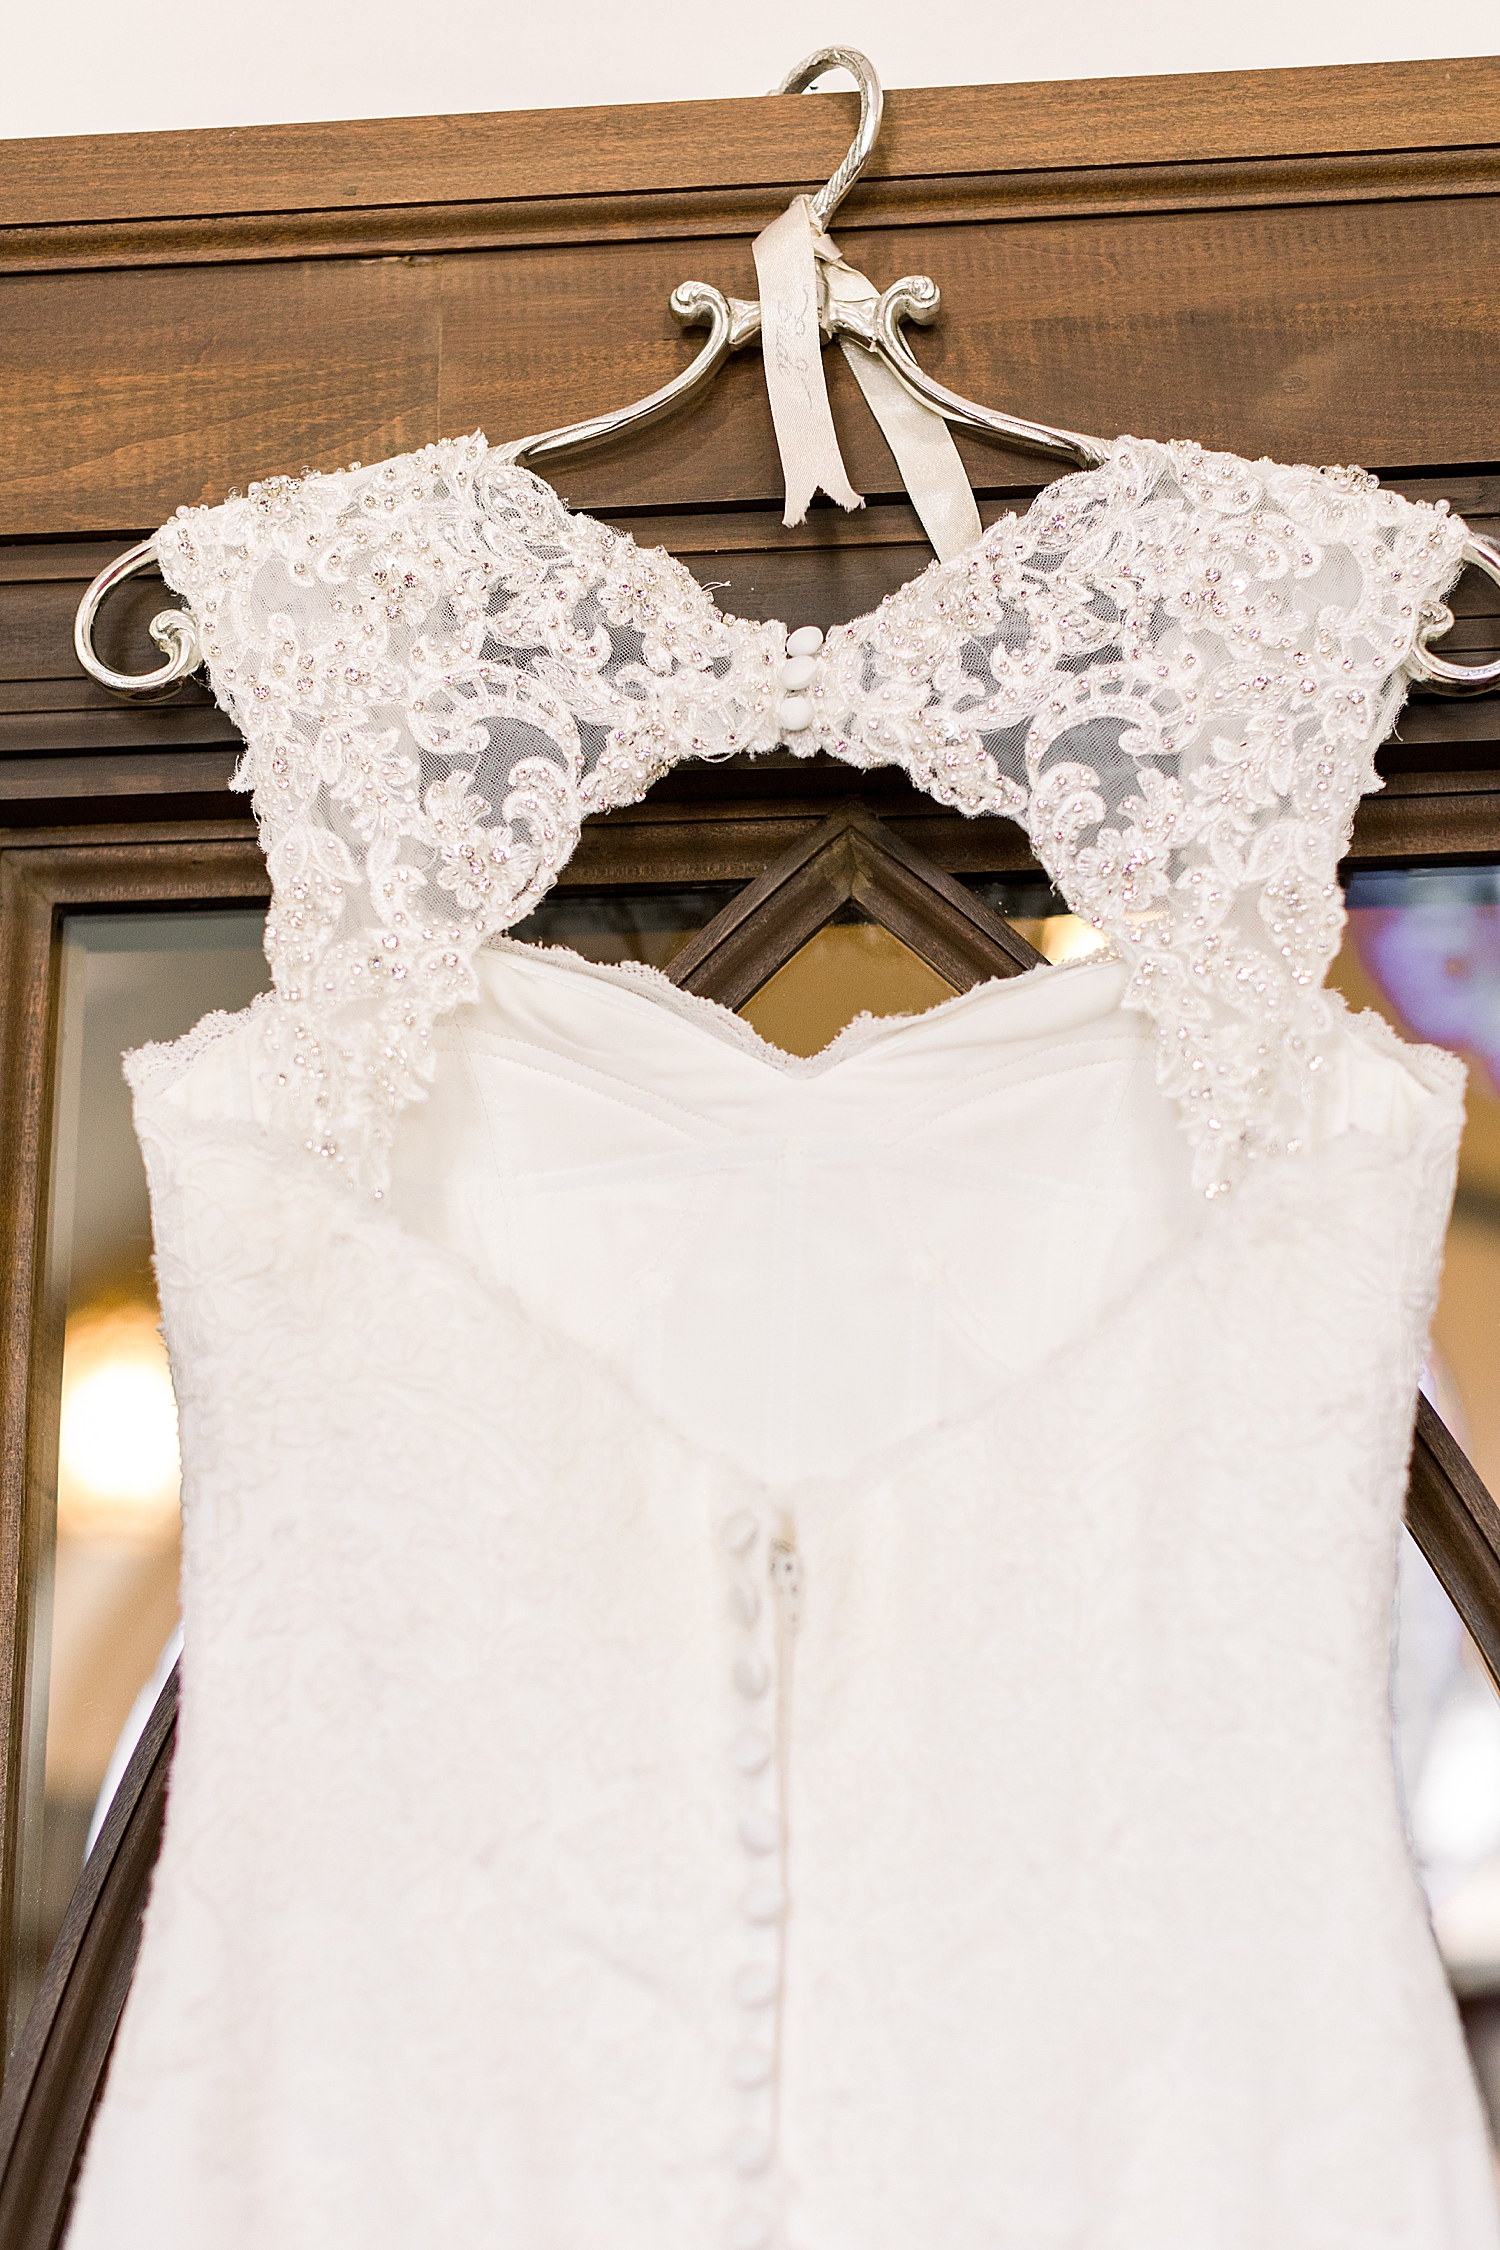 bride's wedding dress hangs in church